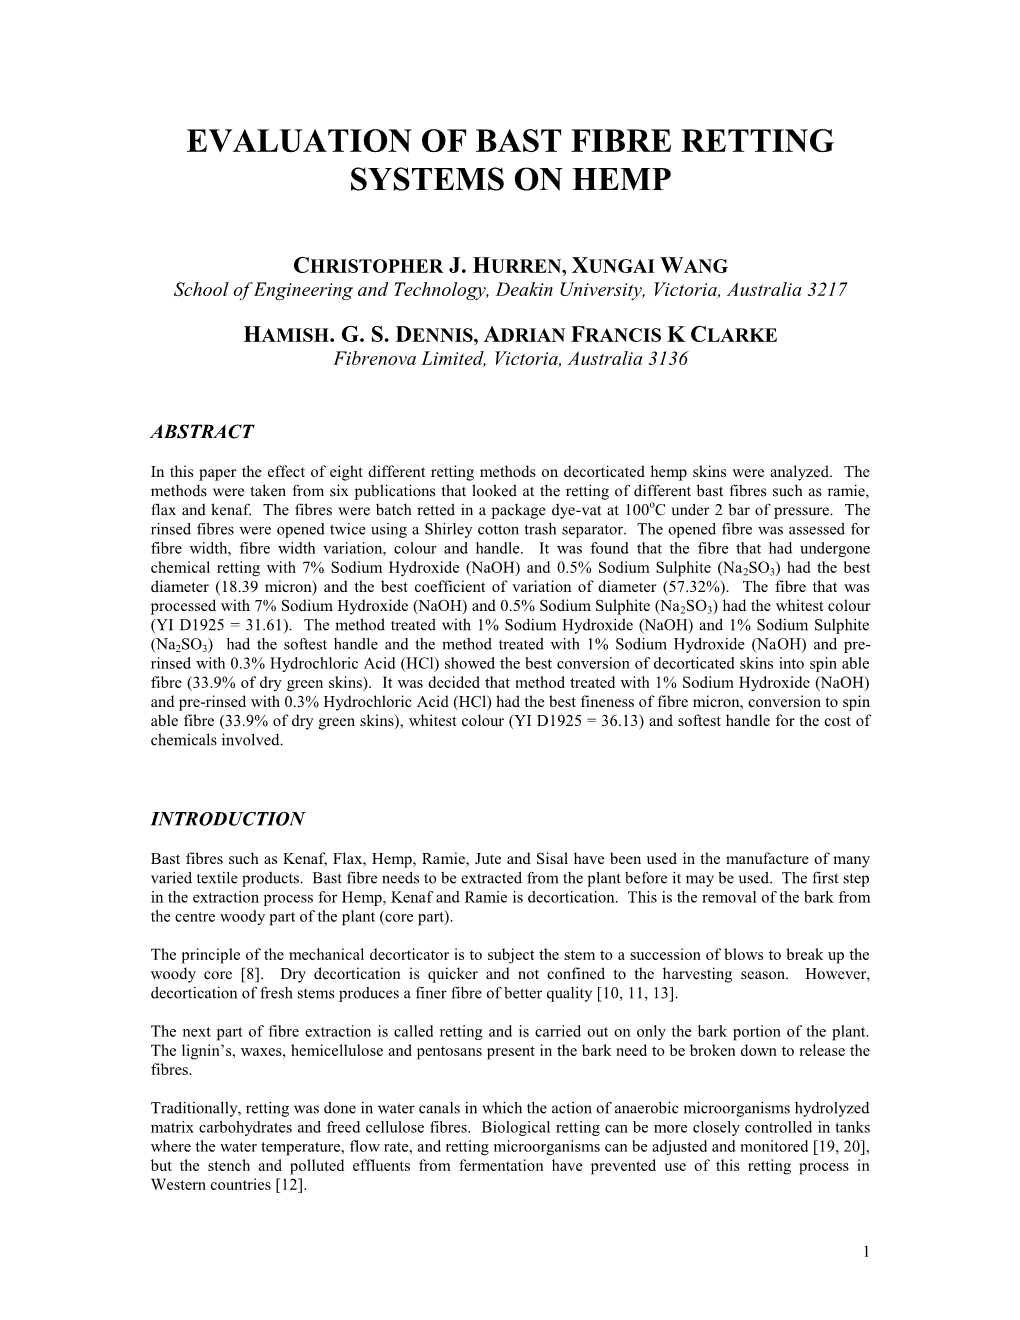 Evaluation of Bast Fibre Retting Systems on Hemp